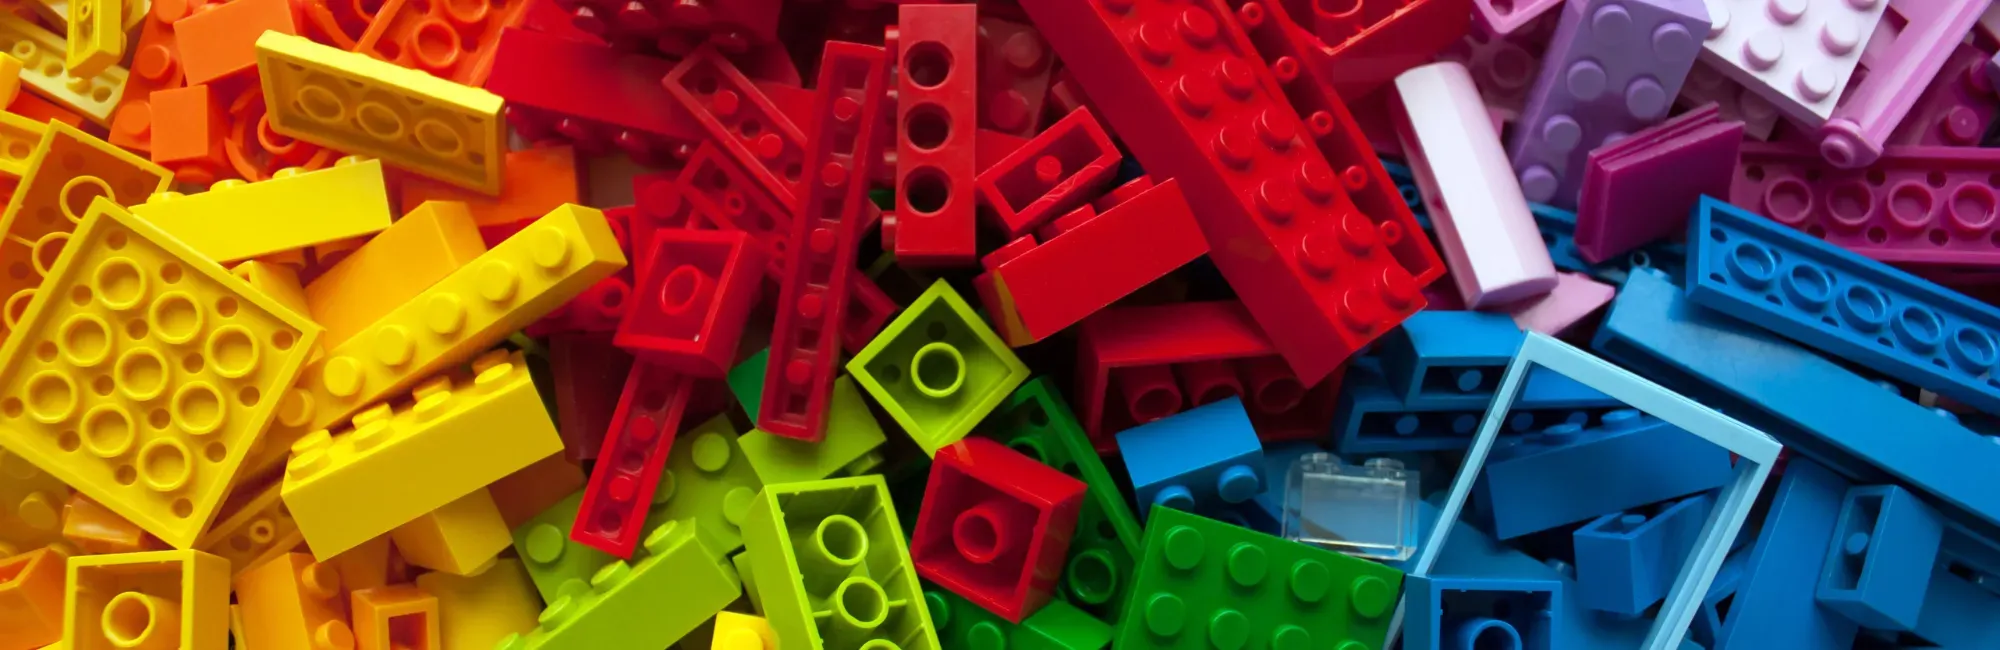 Multicoloured lego